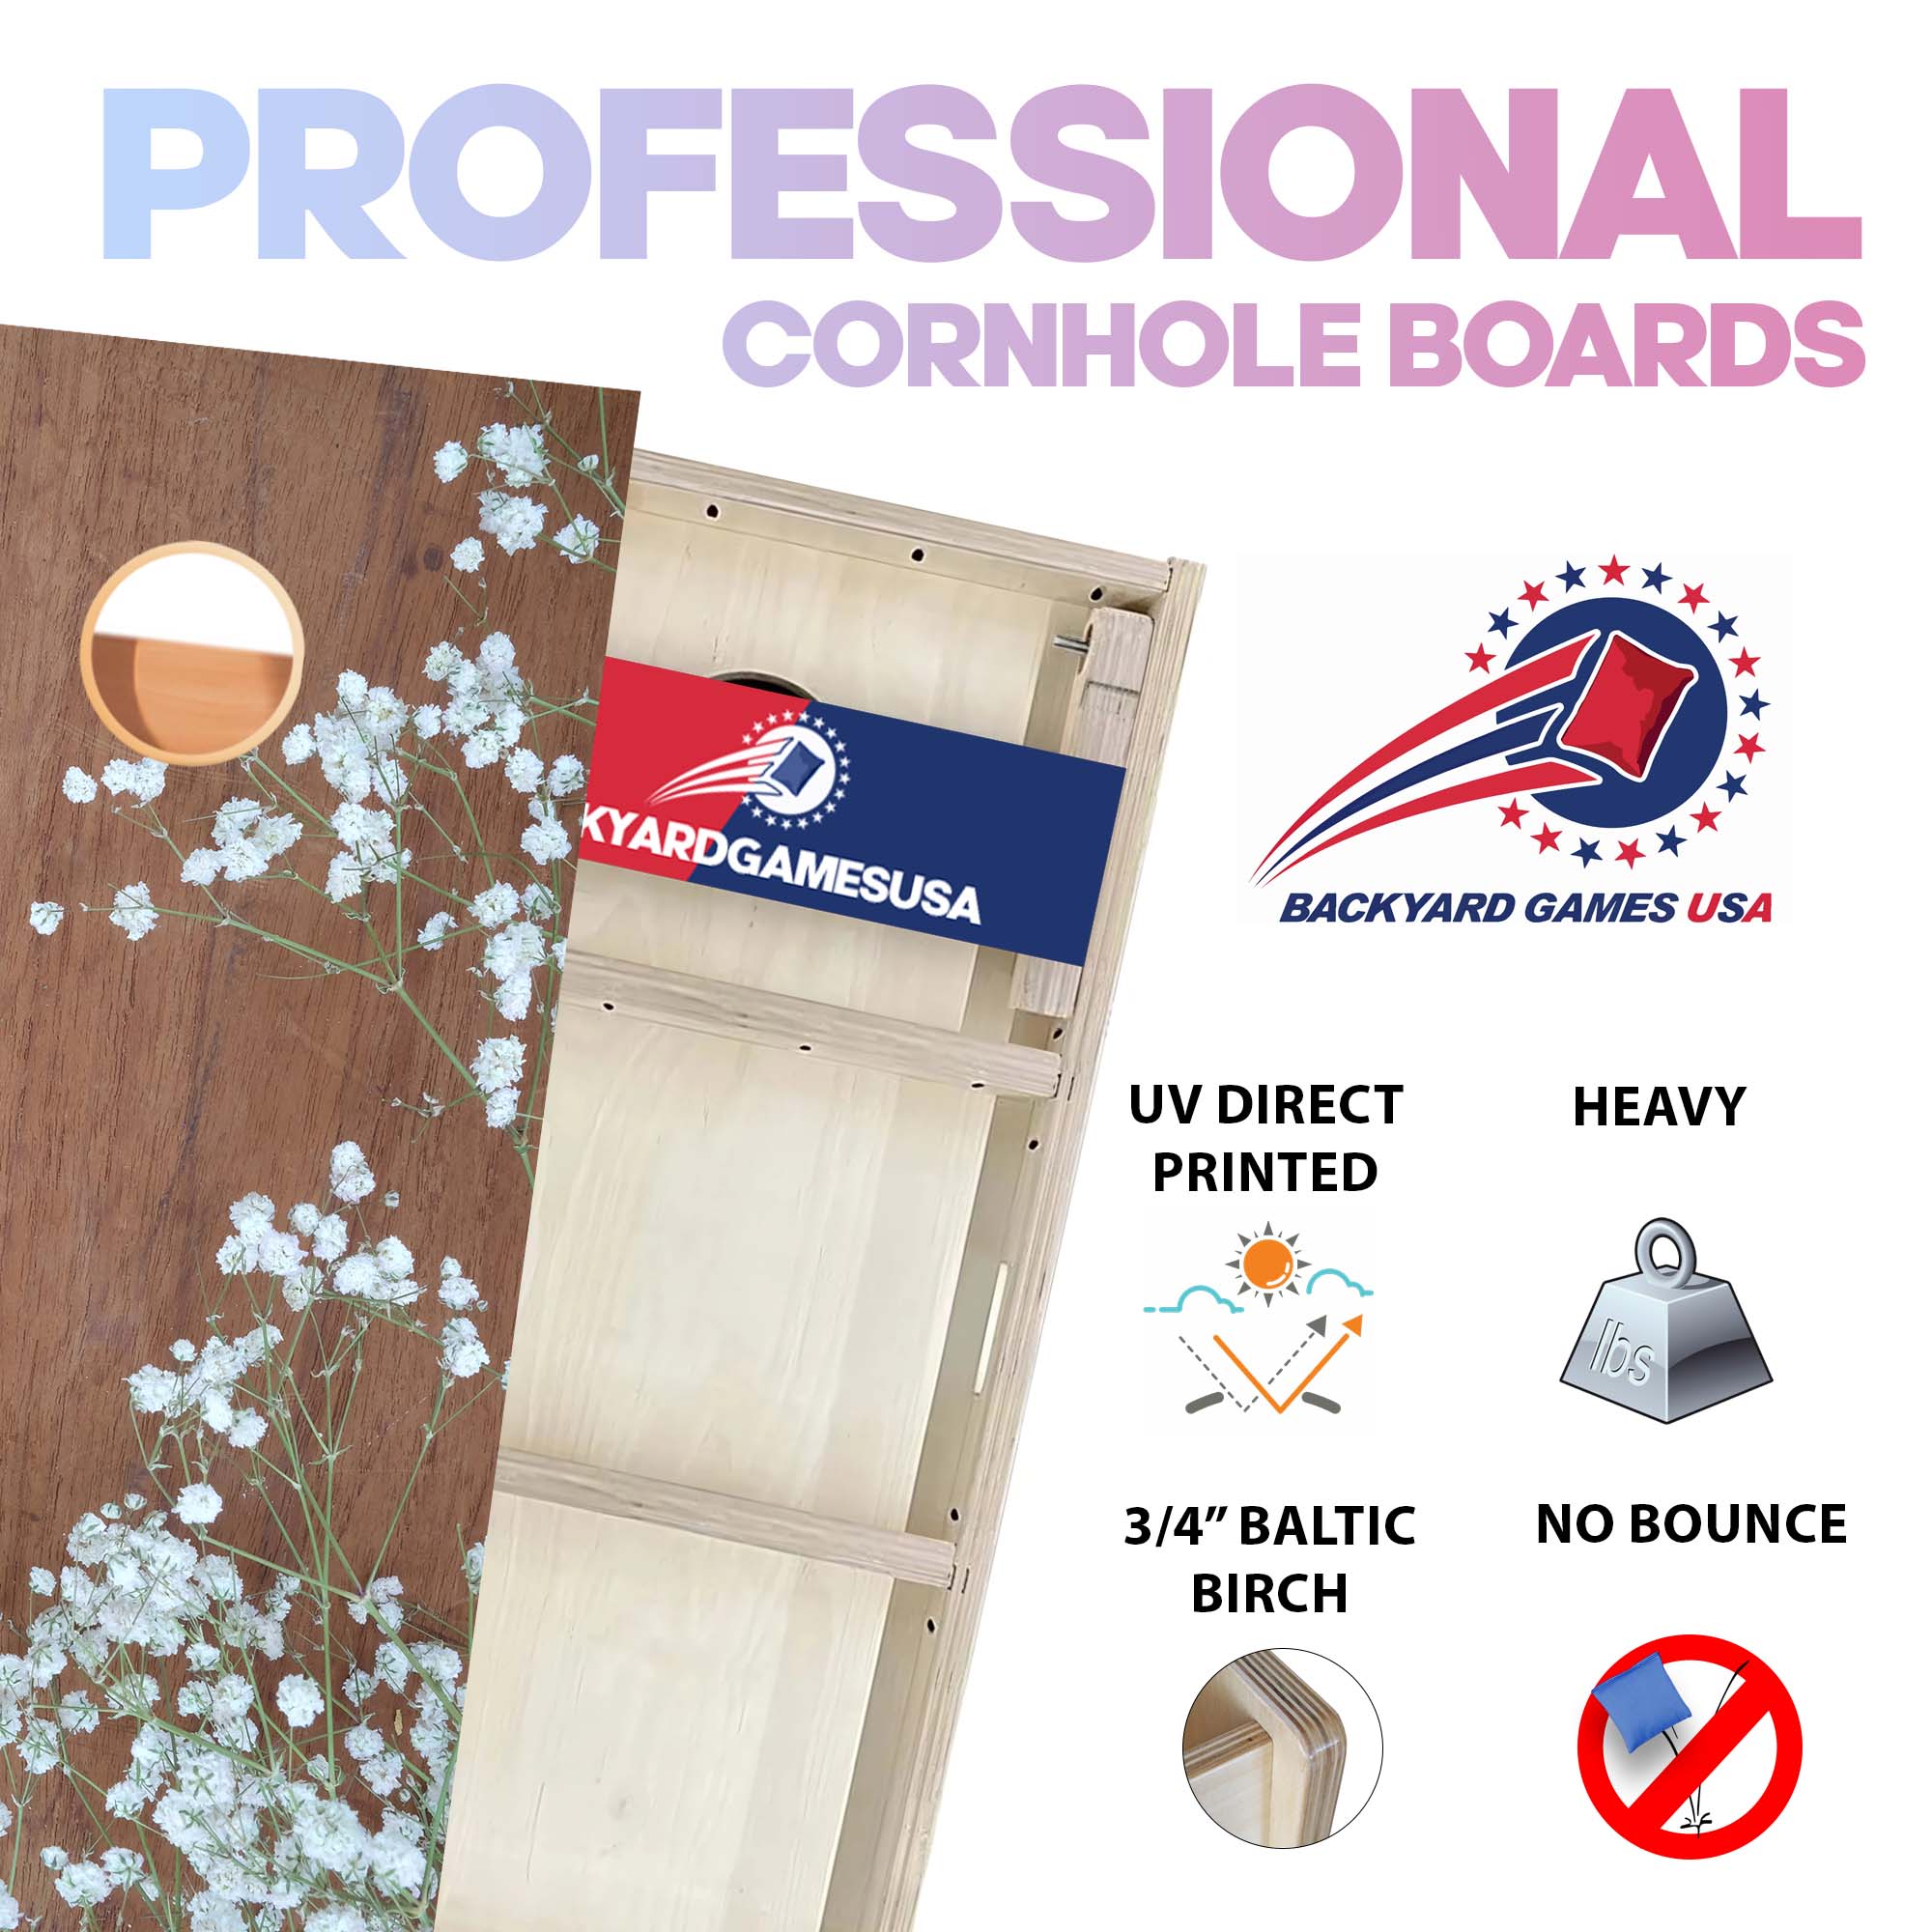 Flowered Grain Professional Cornhole Boards